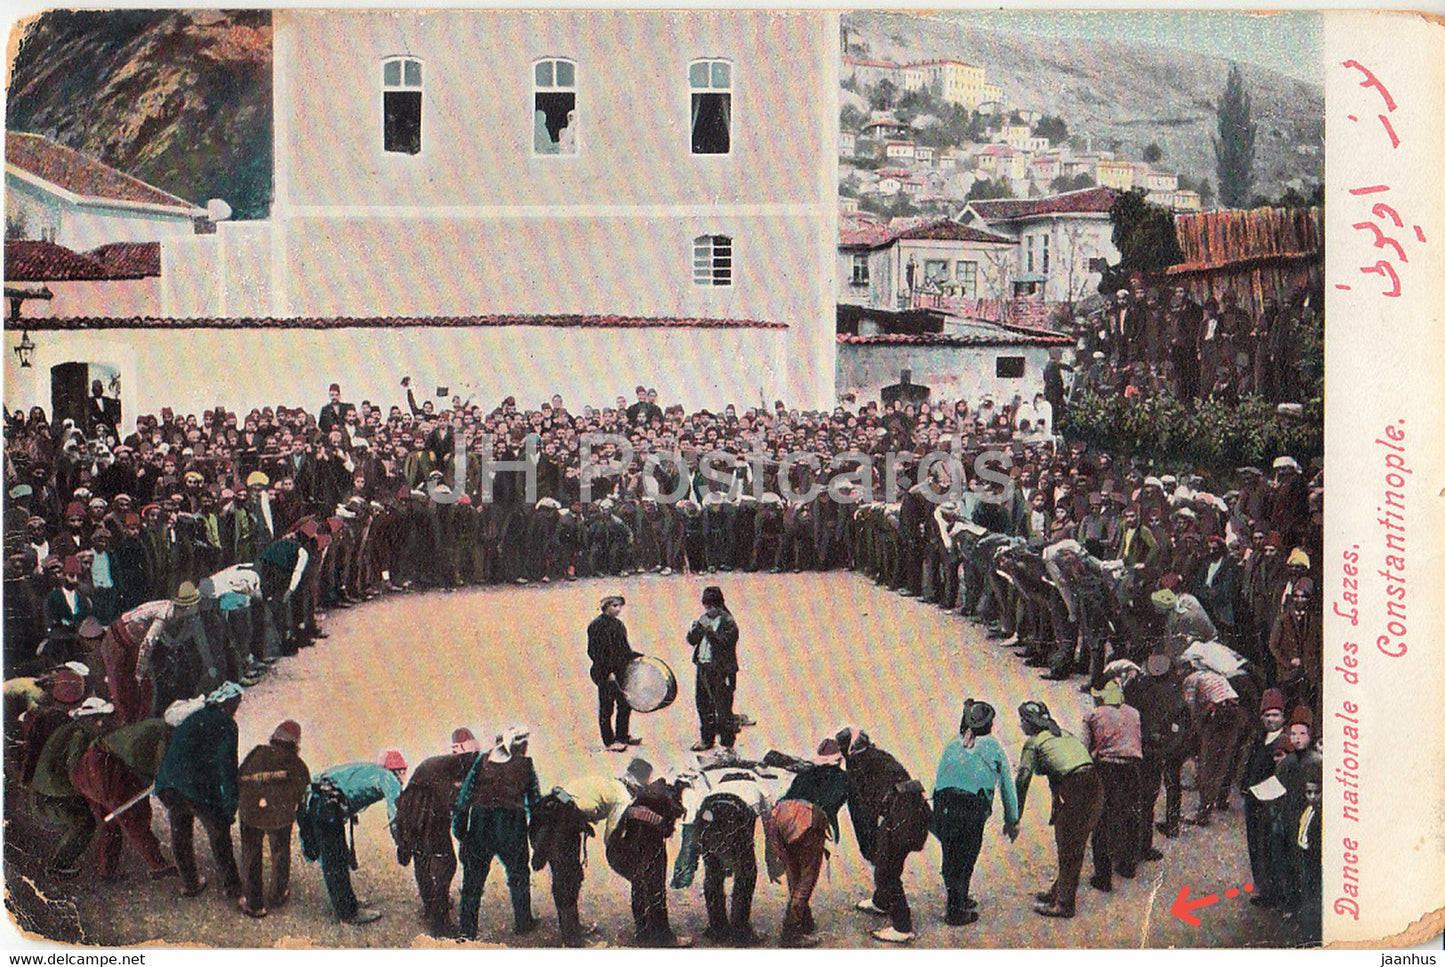 Constantinople - Dance Nationale des Lazes - Folk Dance - old postcard - 1909 - Turkey - used - JH Postcards